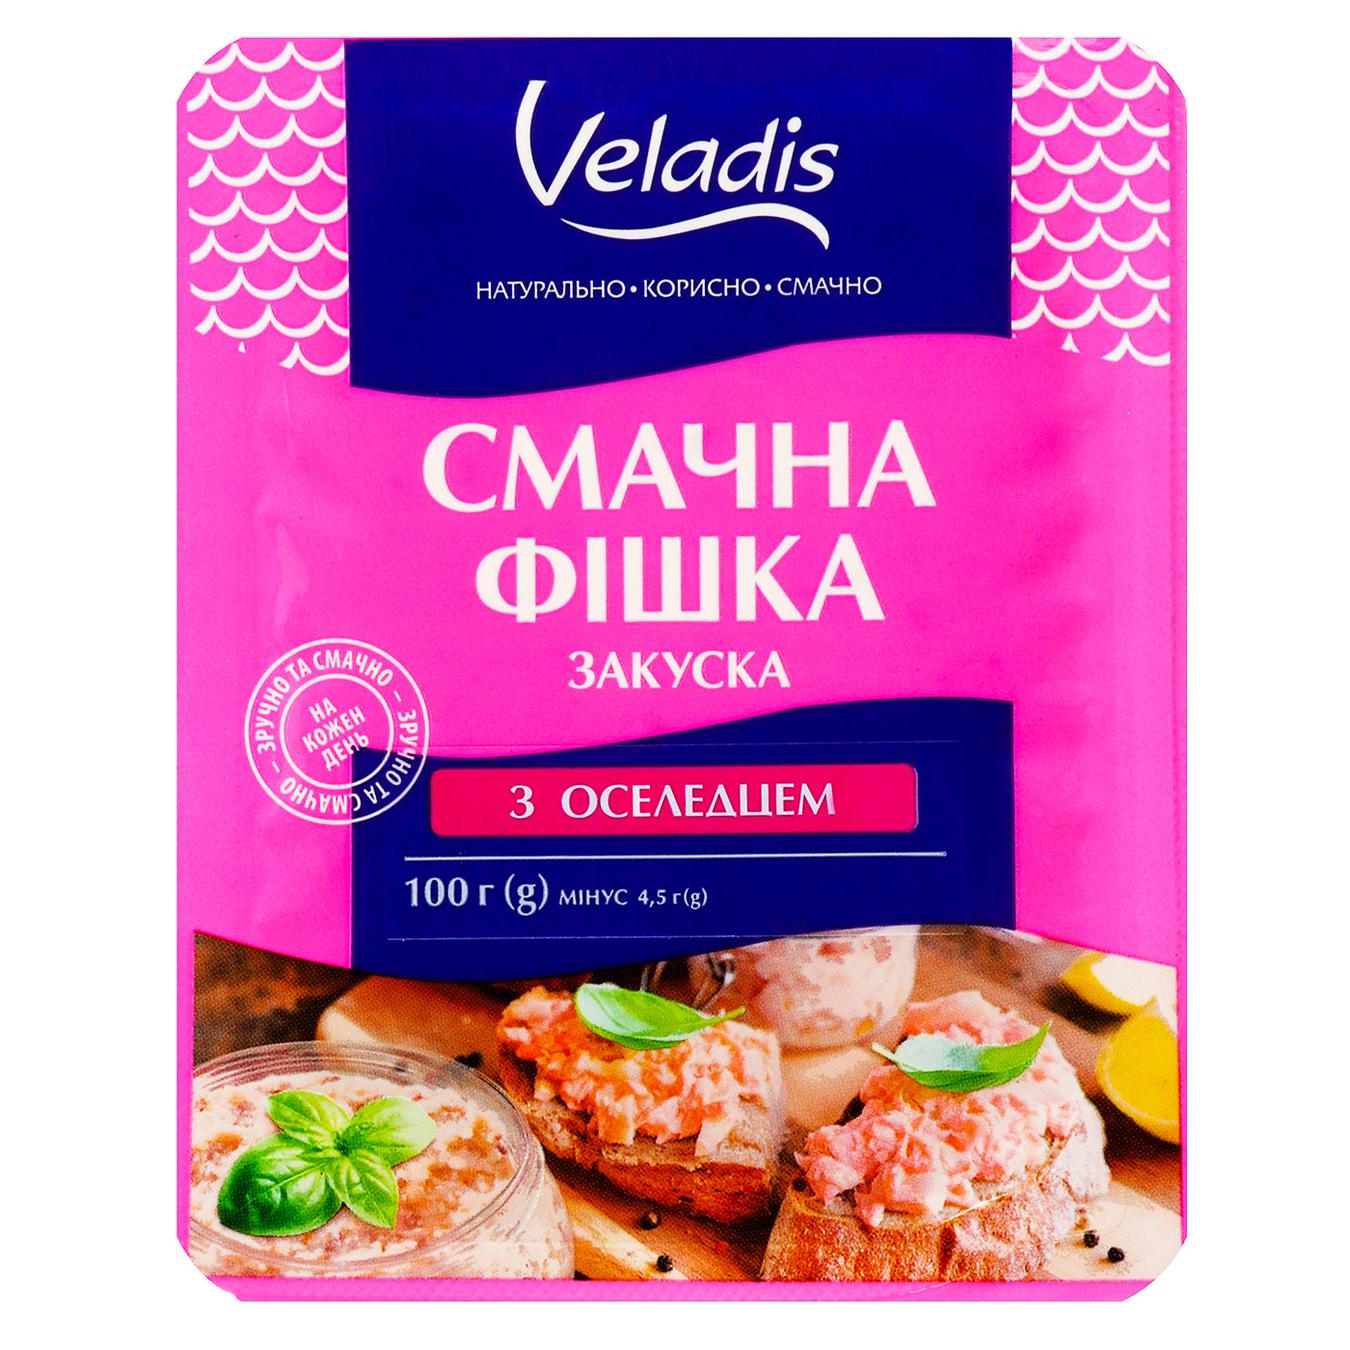 Snack Veladis Tasty fish chip with herring 100g